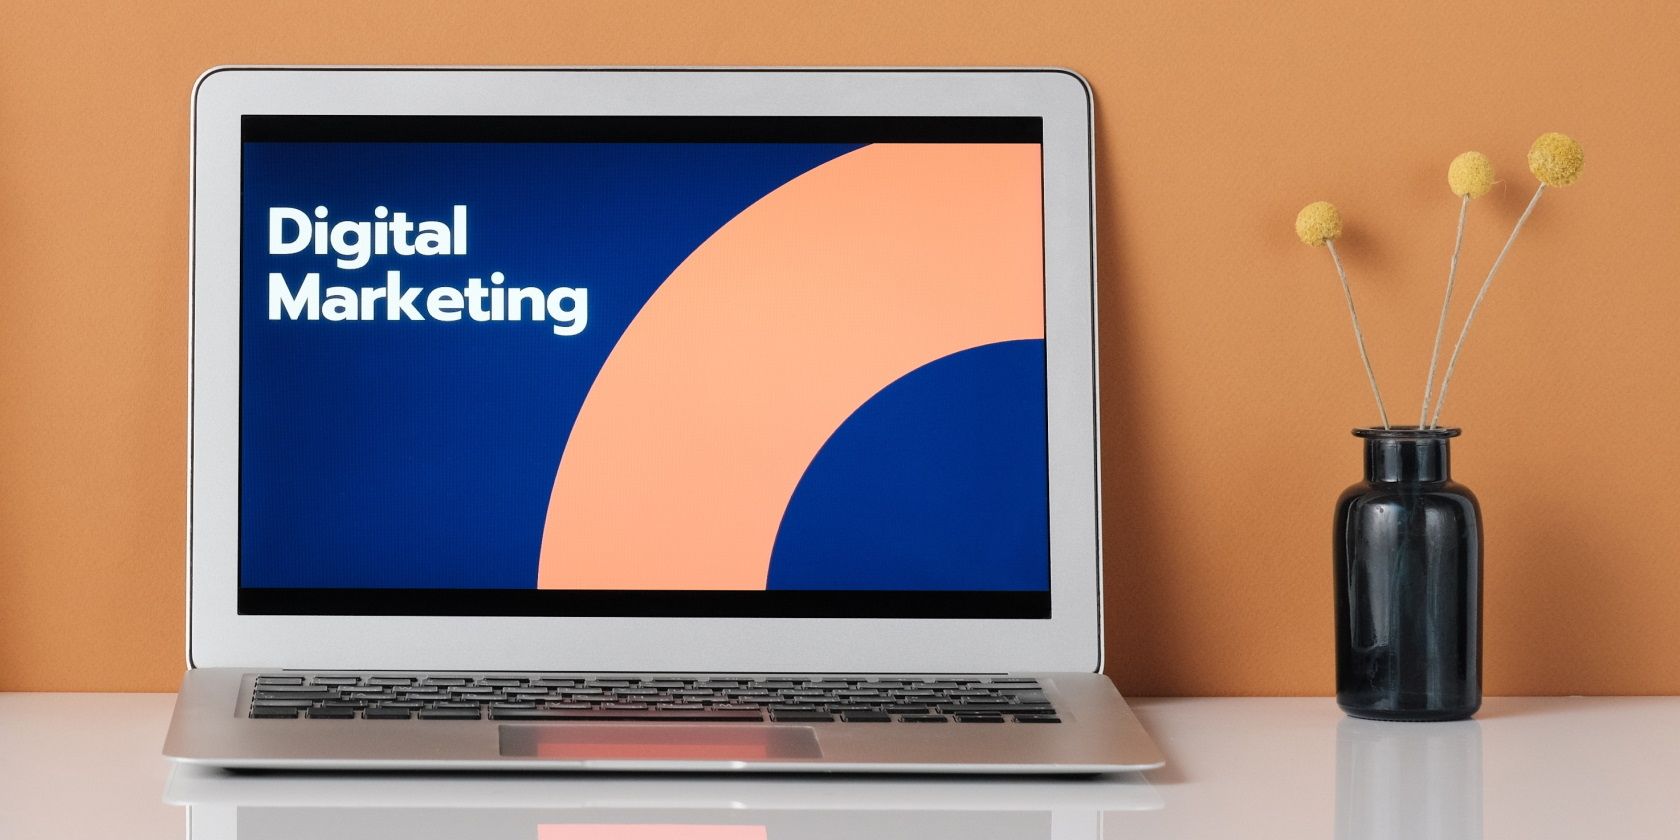 digital marketing screen on a laptop